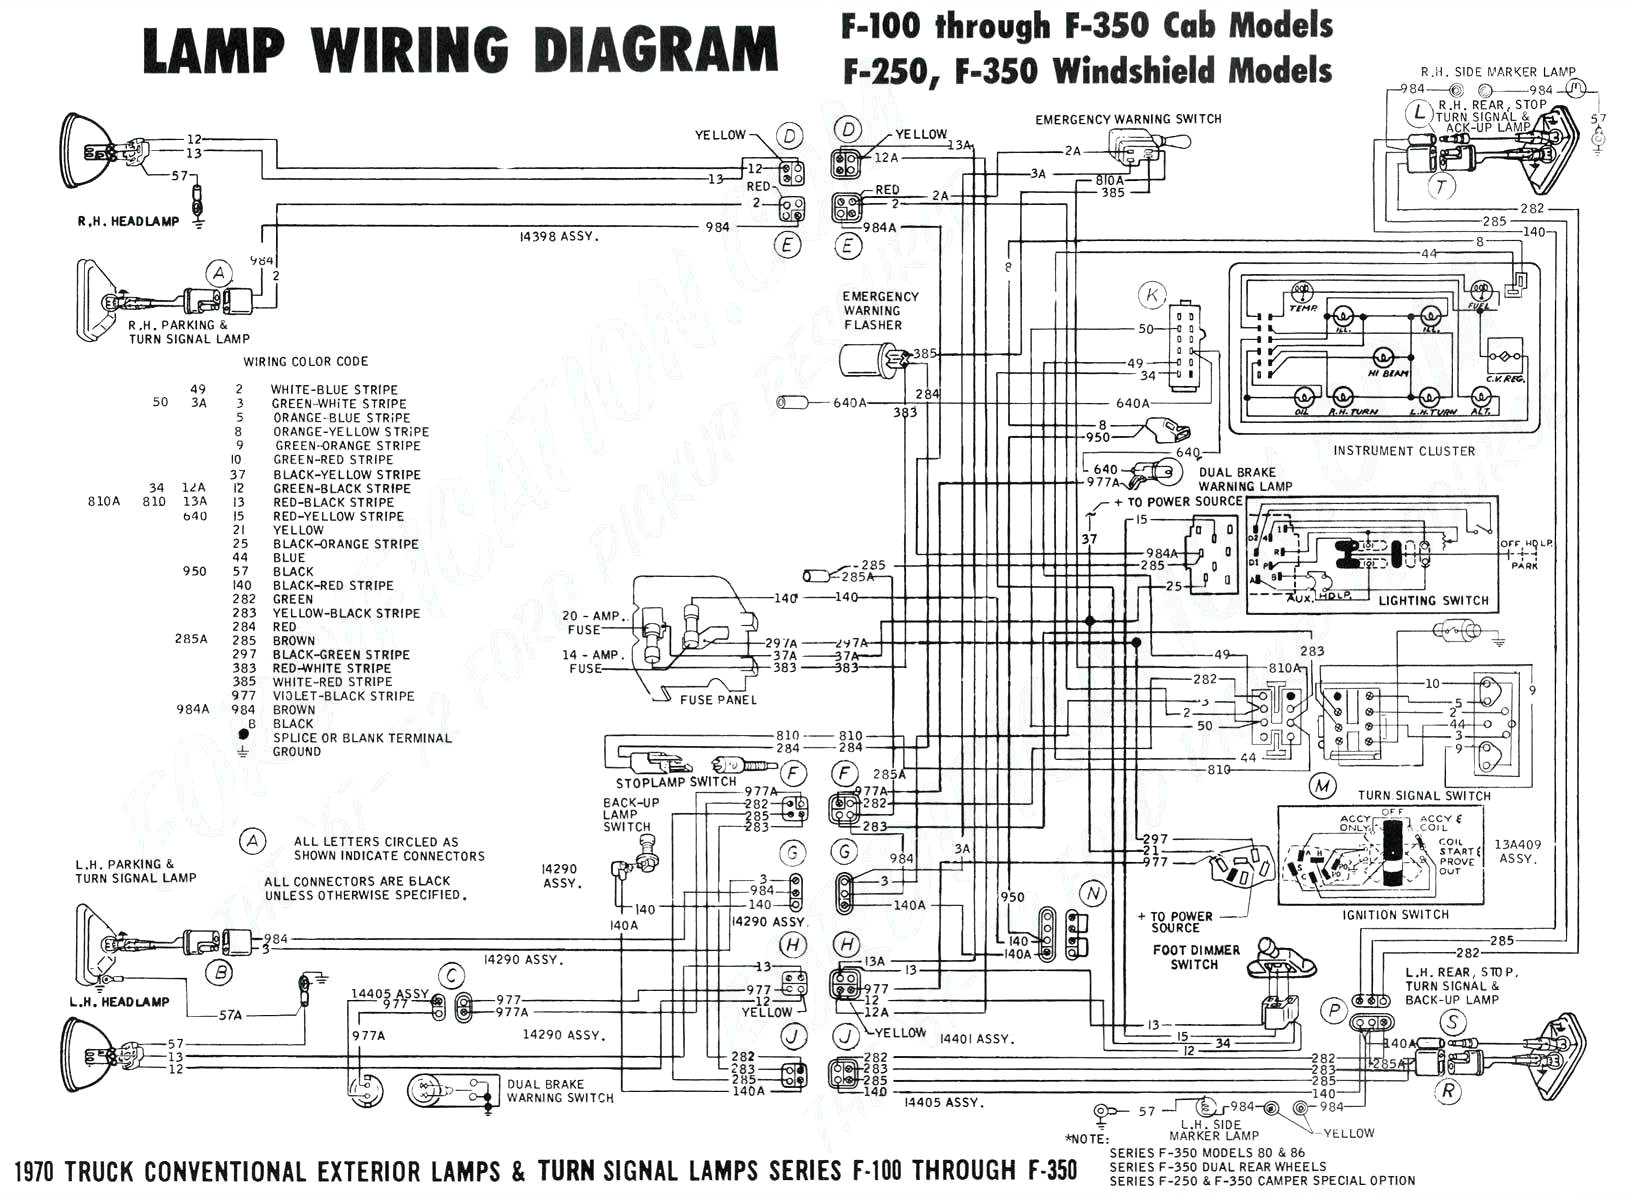 ih 986 wiring diagram wiring diagram centrewiring diagram ih 1586 wiring diagram article reviewih 986 wiring